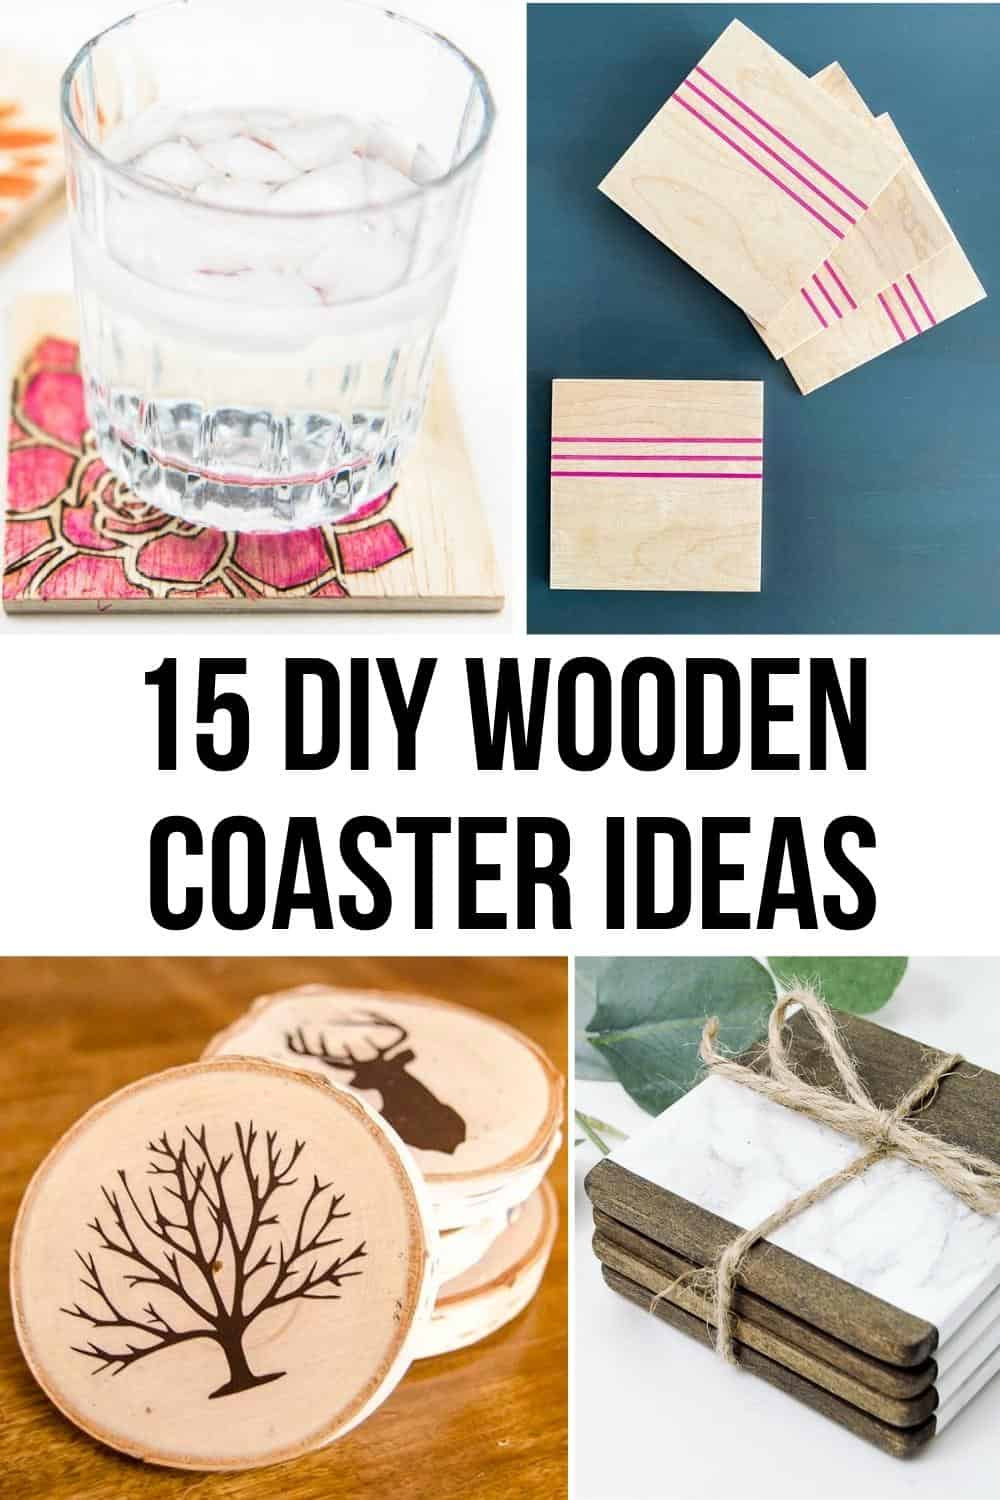 15 DIY wooden coaster ideas